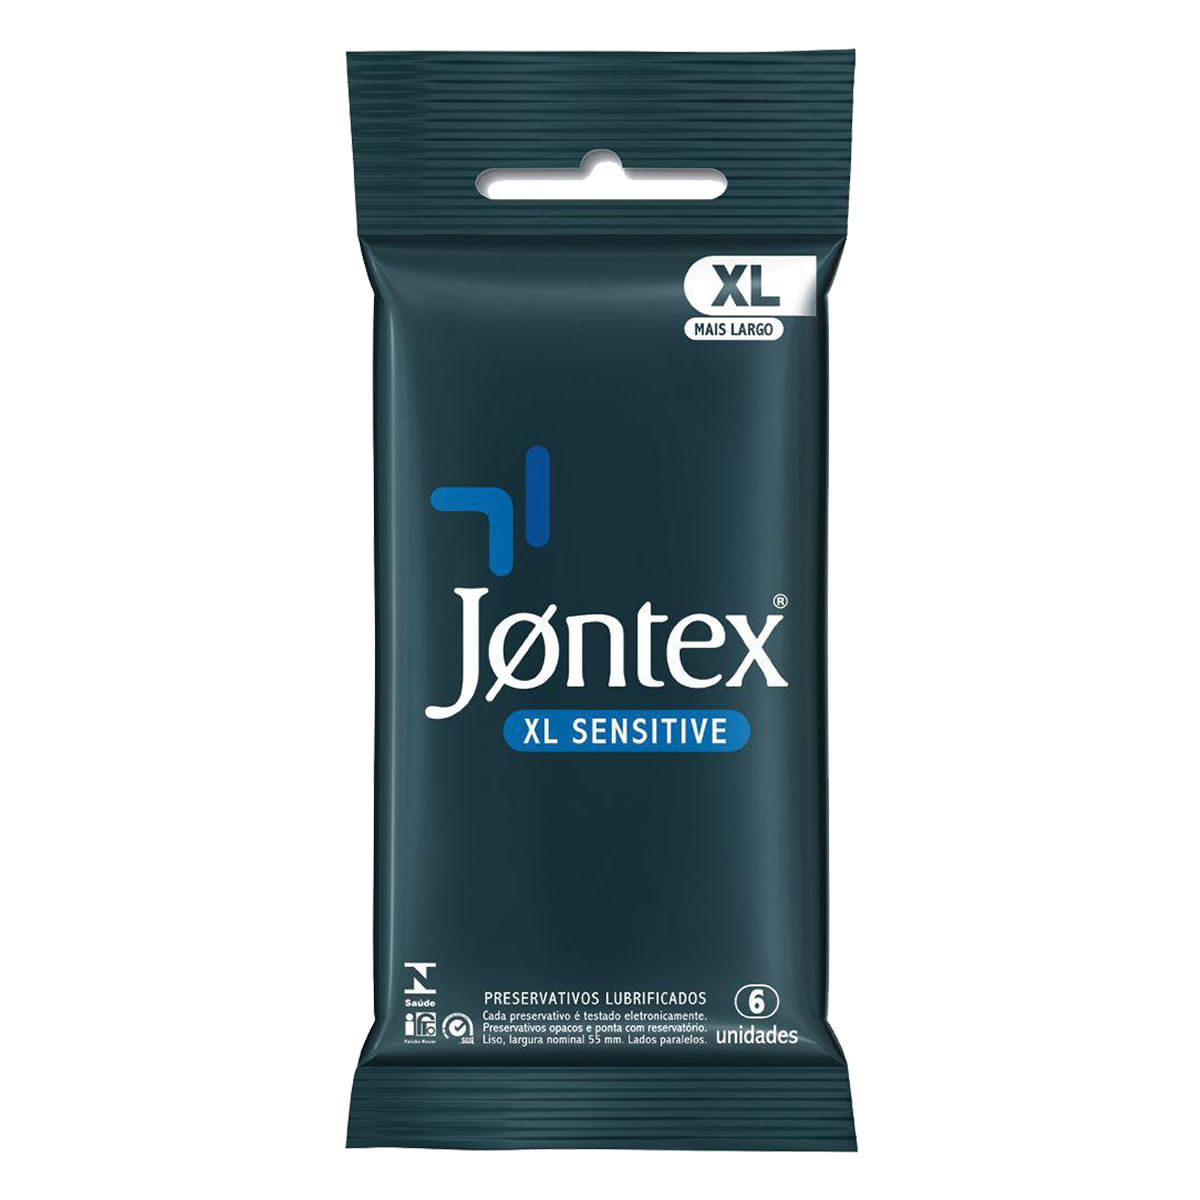 Preservativos Lubrificados XL Sensitive com 6 unidades Jontex